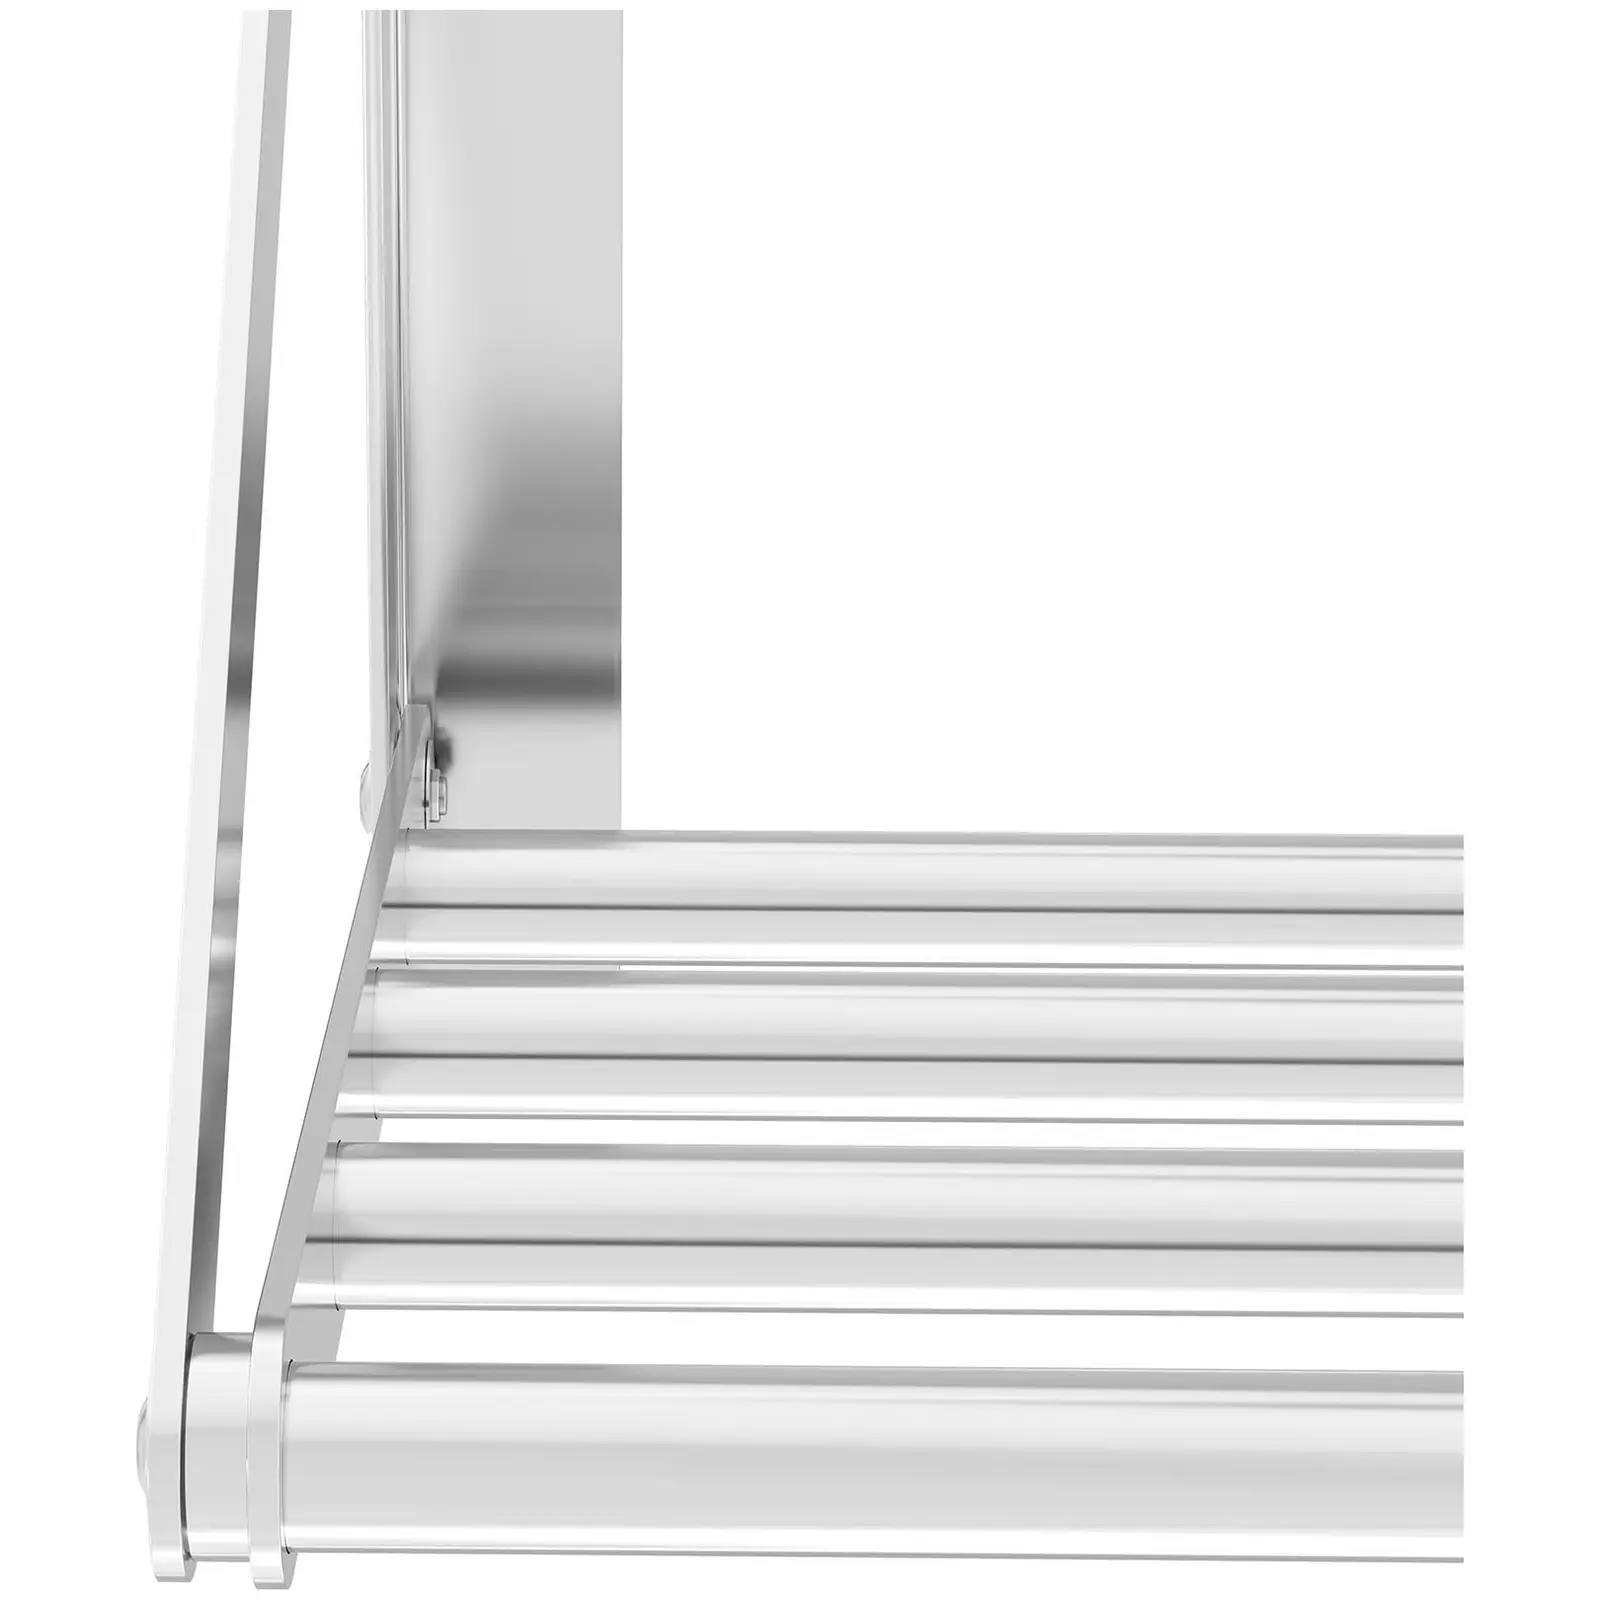 Wall Shelf - folding - tube style - 100 x 30 cm - 40 kg - stainless steel